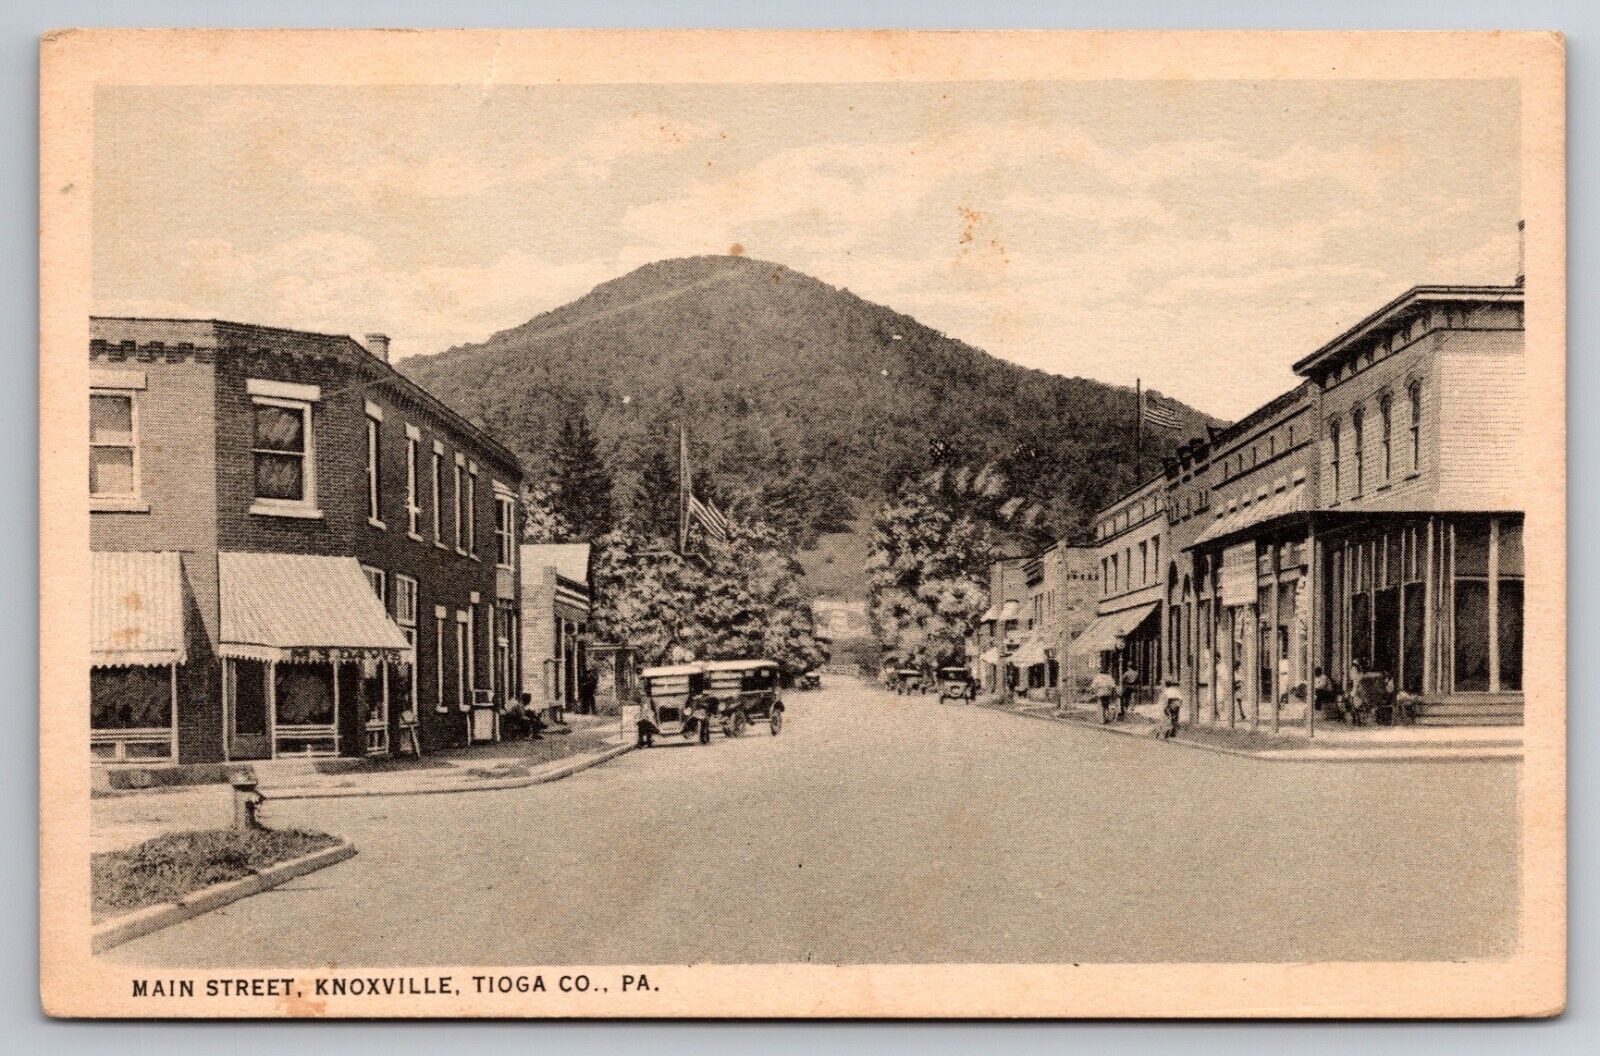 Main Street Knoxville Tioga County Pennsylvania PA c1920 Postcard